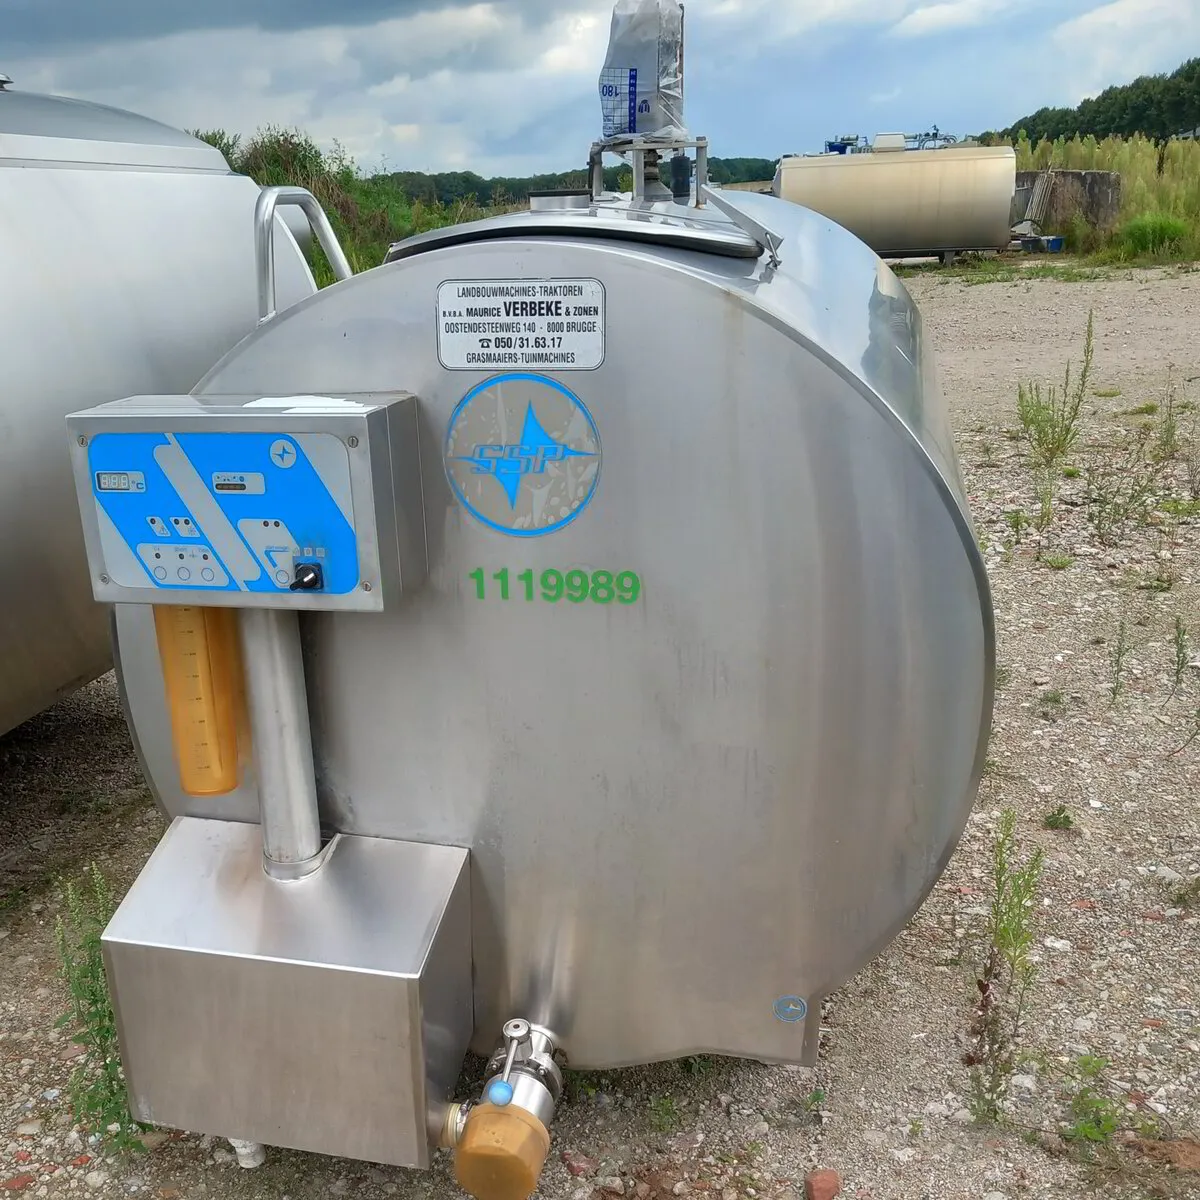 Mueller P-1700 1800 liter, milk cooling tank